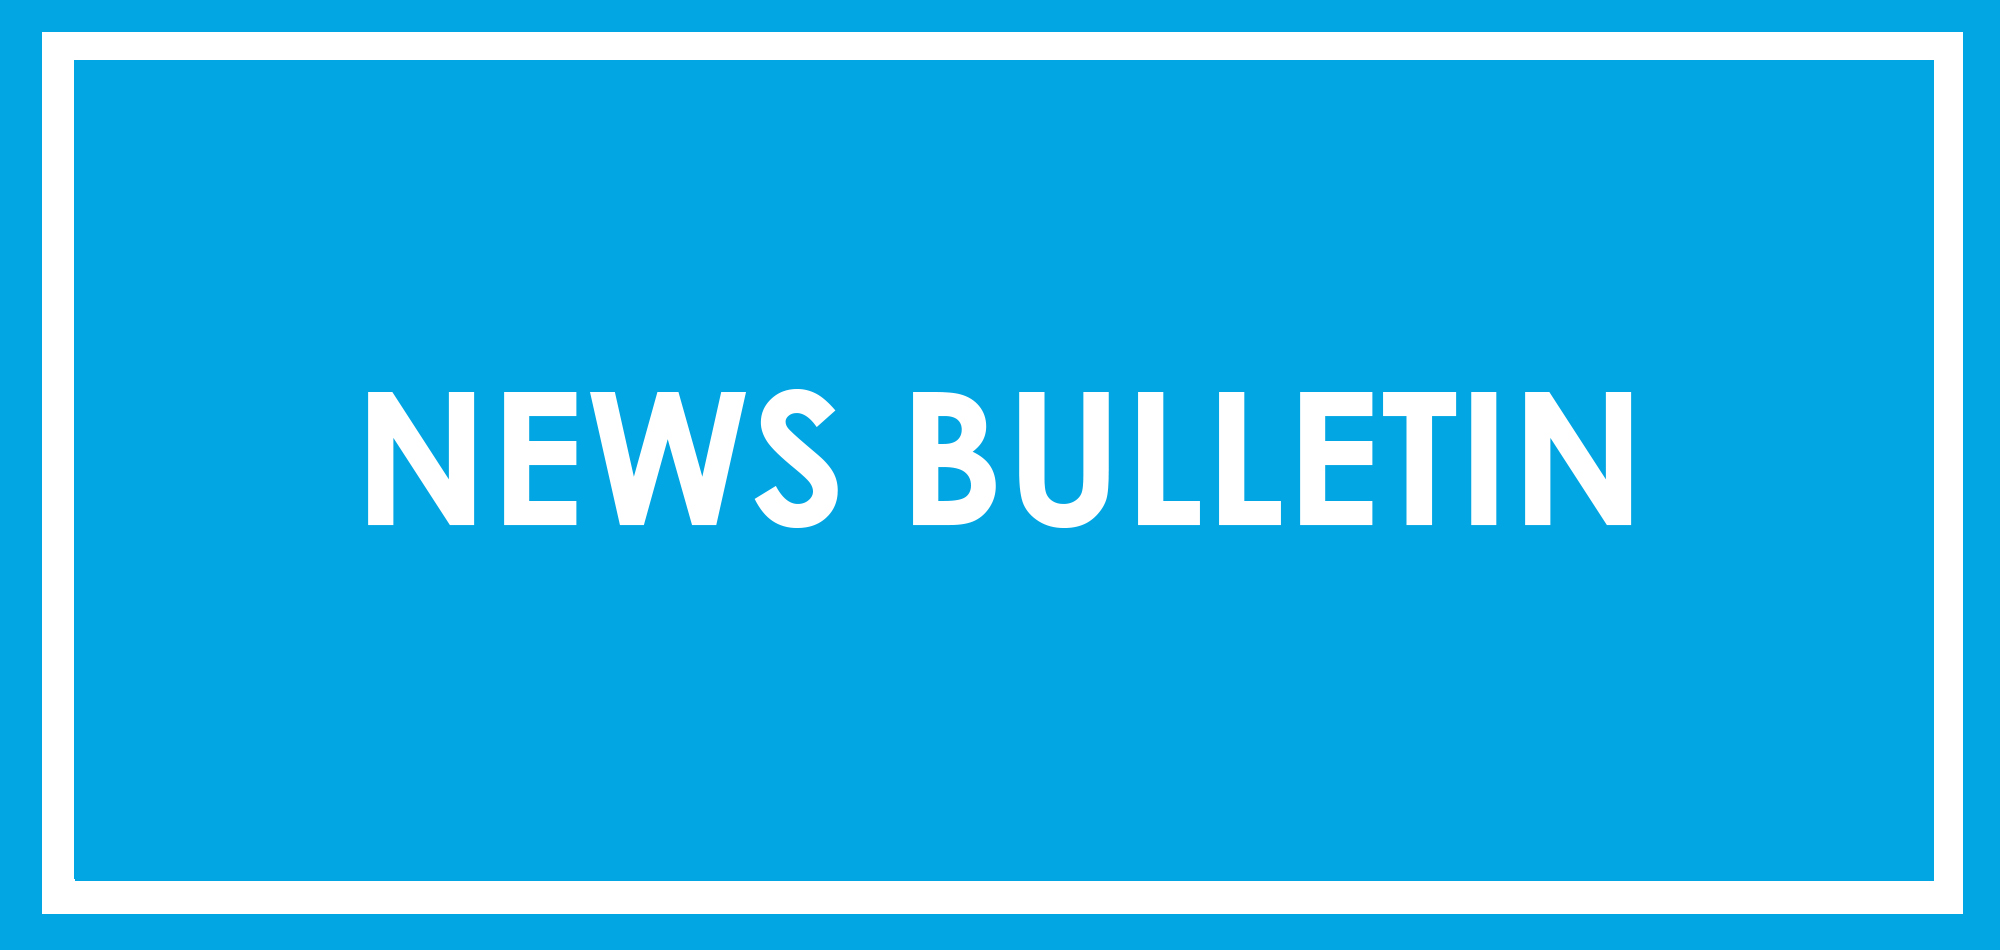 News Bulletin - 14.06.21